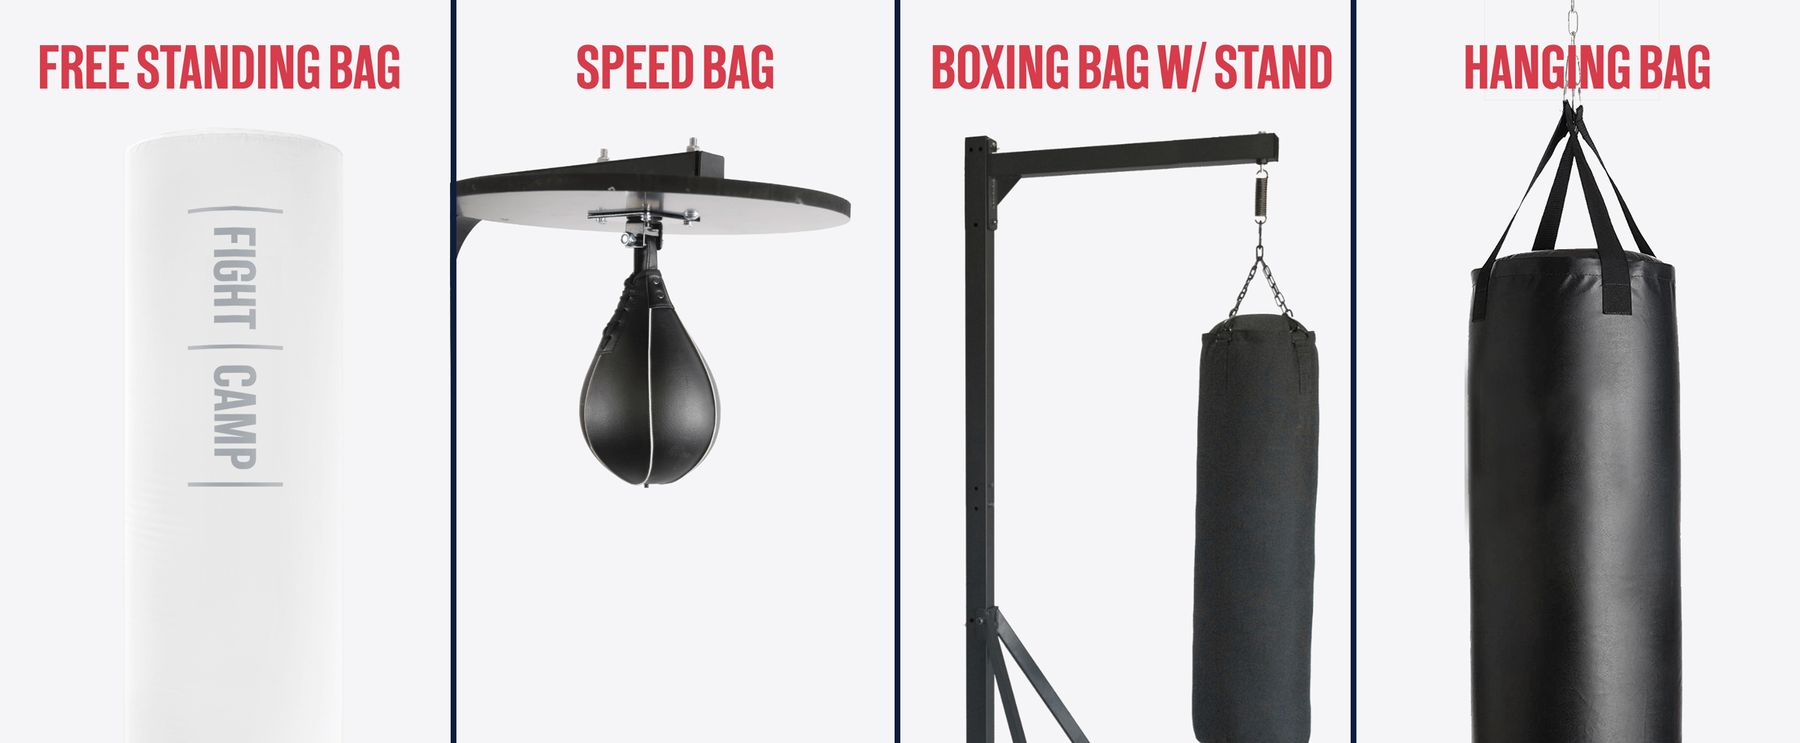 heavy bag boxing drills basics of investing